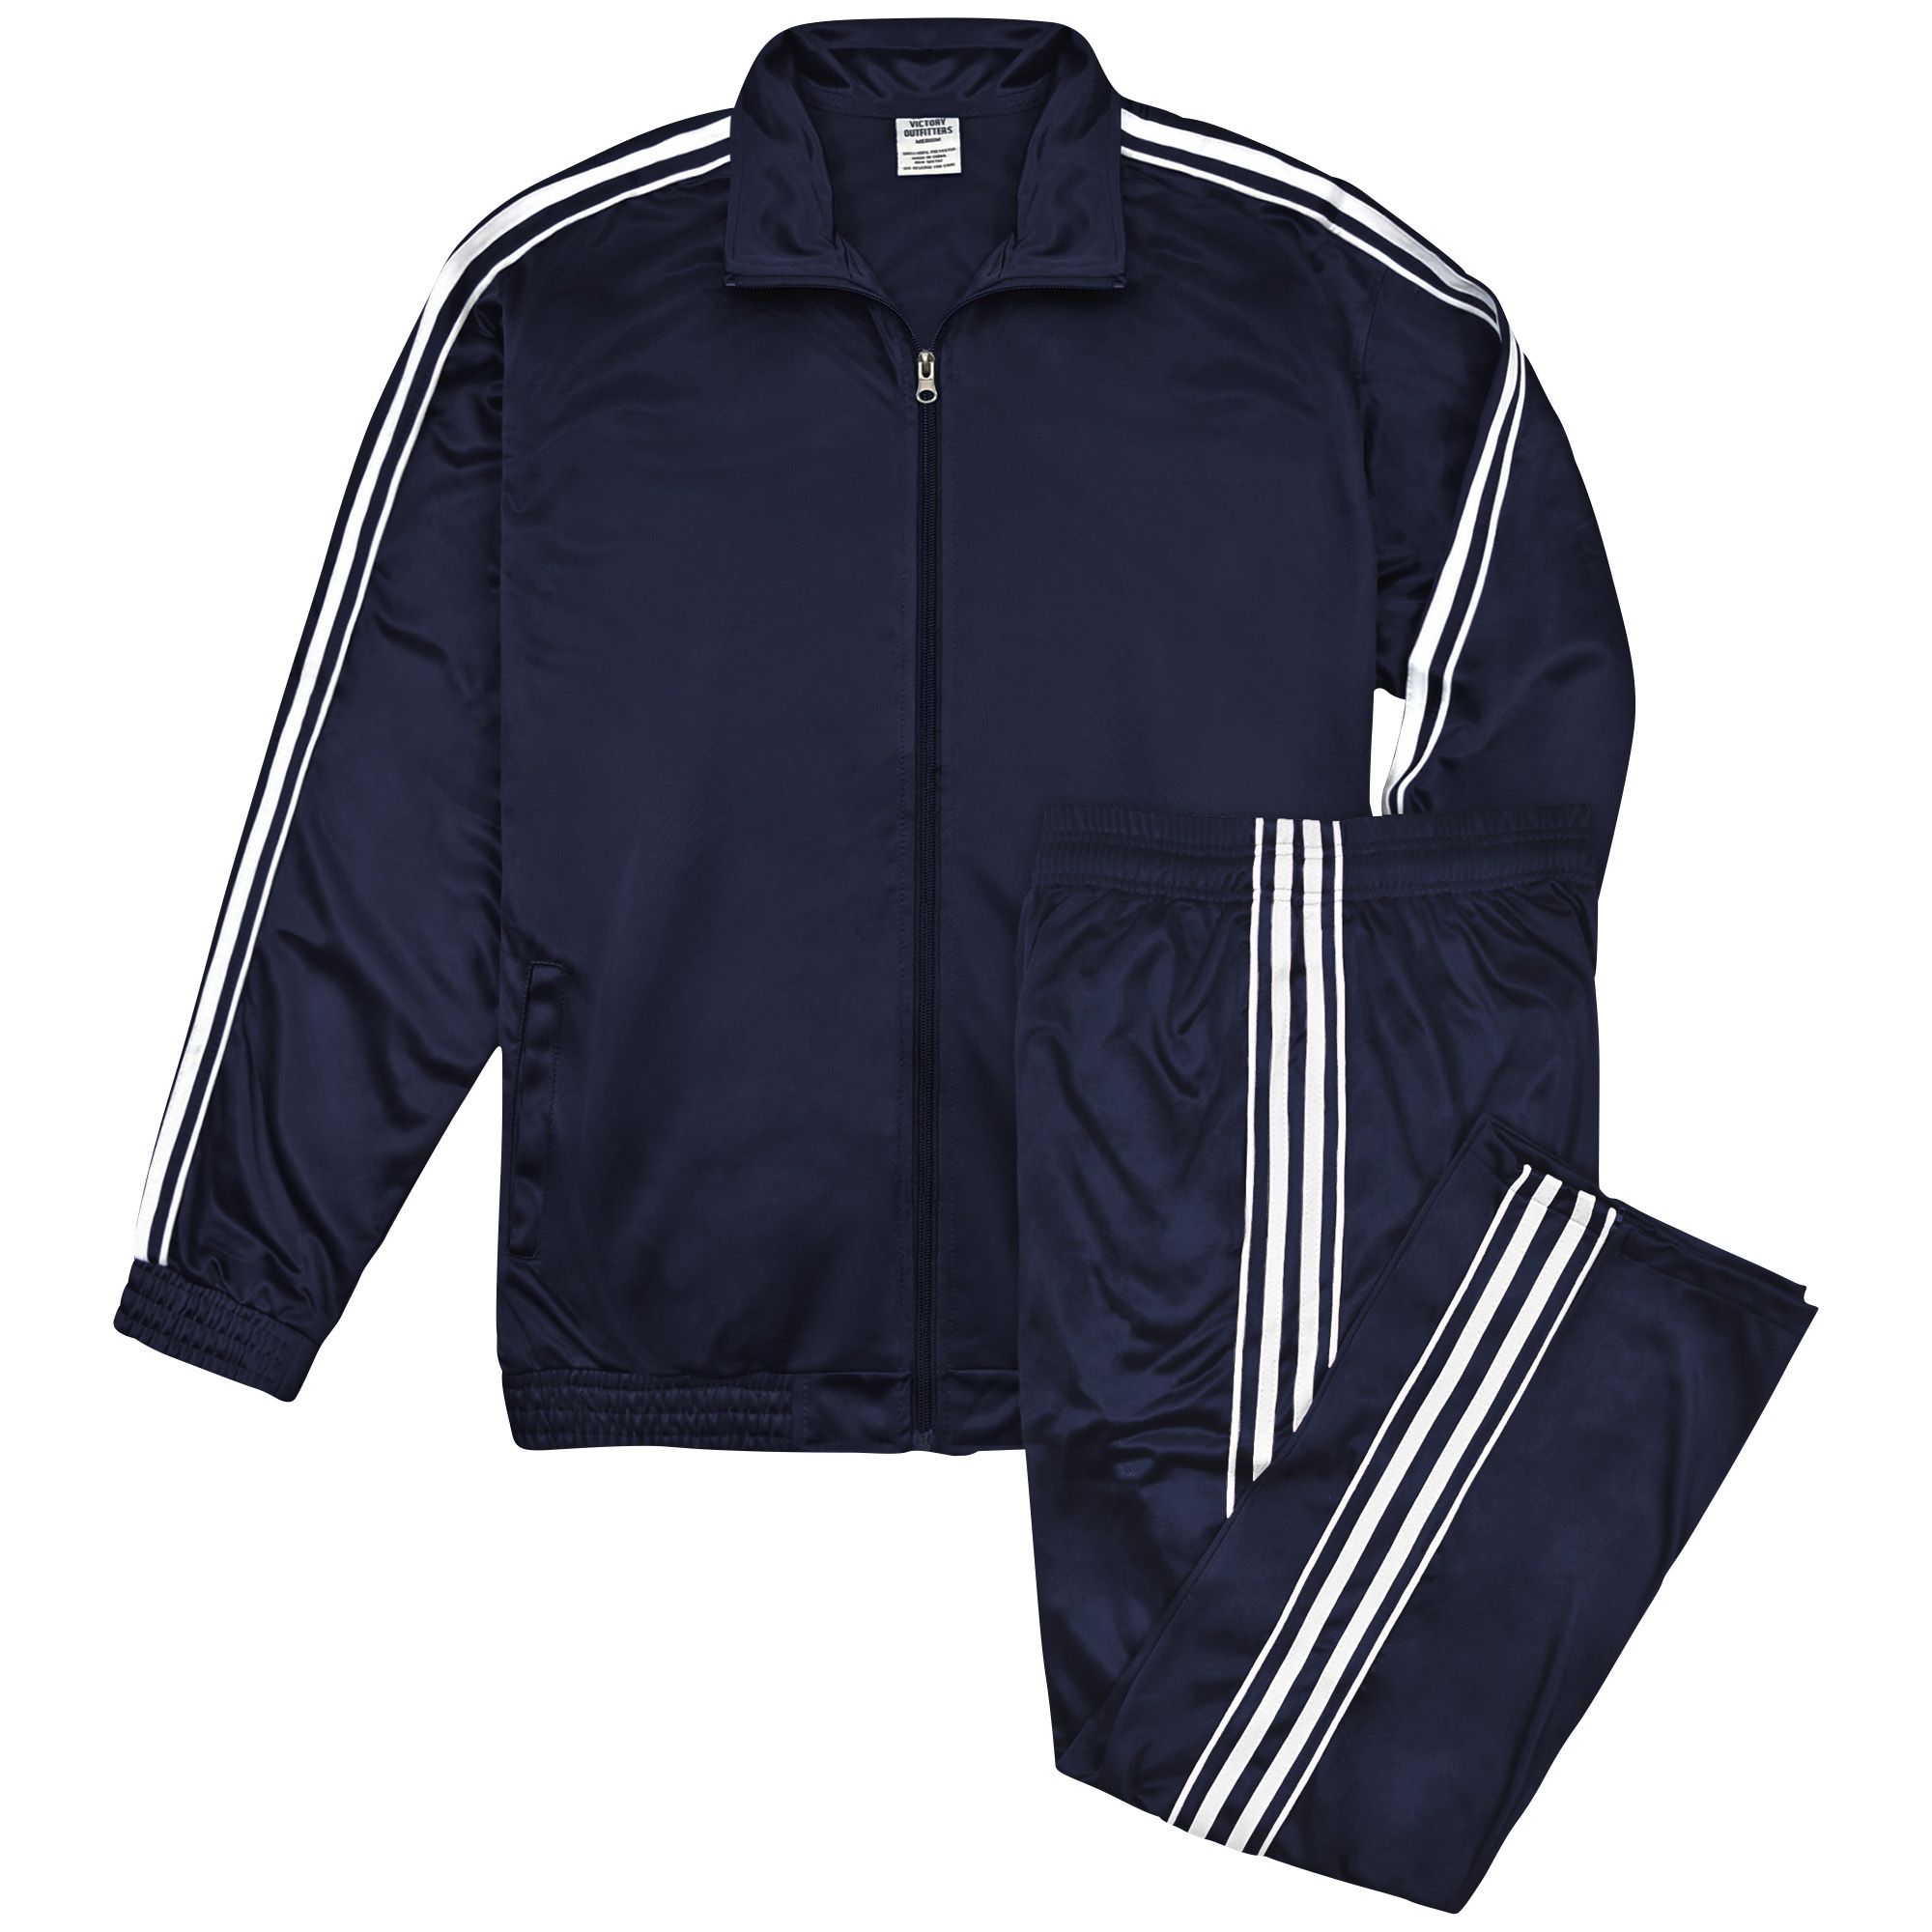 Victory Outfitters Men's Hooded Fleece Lined Denim Jacket - Med Blue - Medium